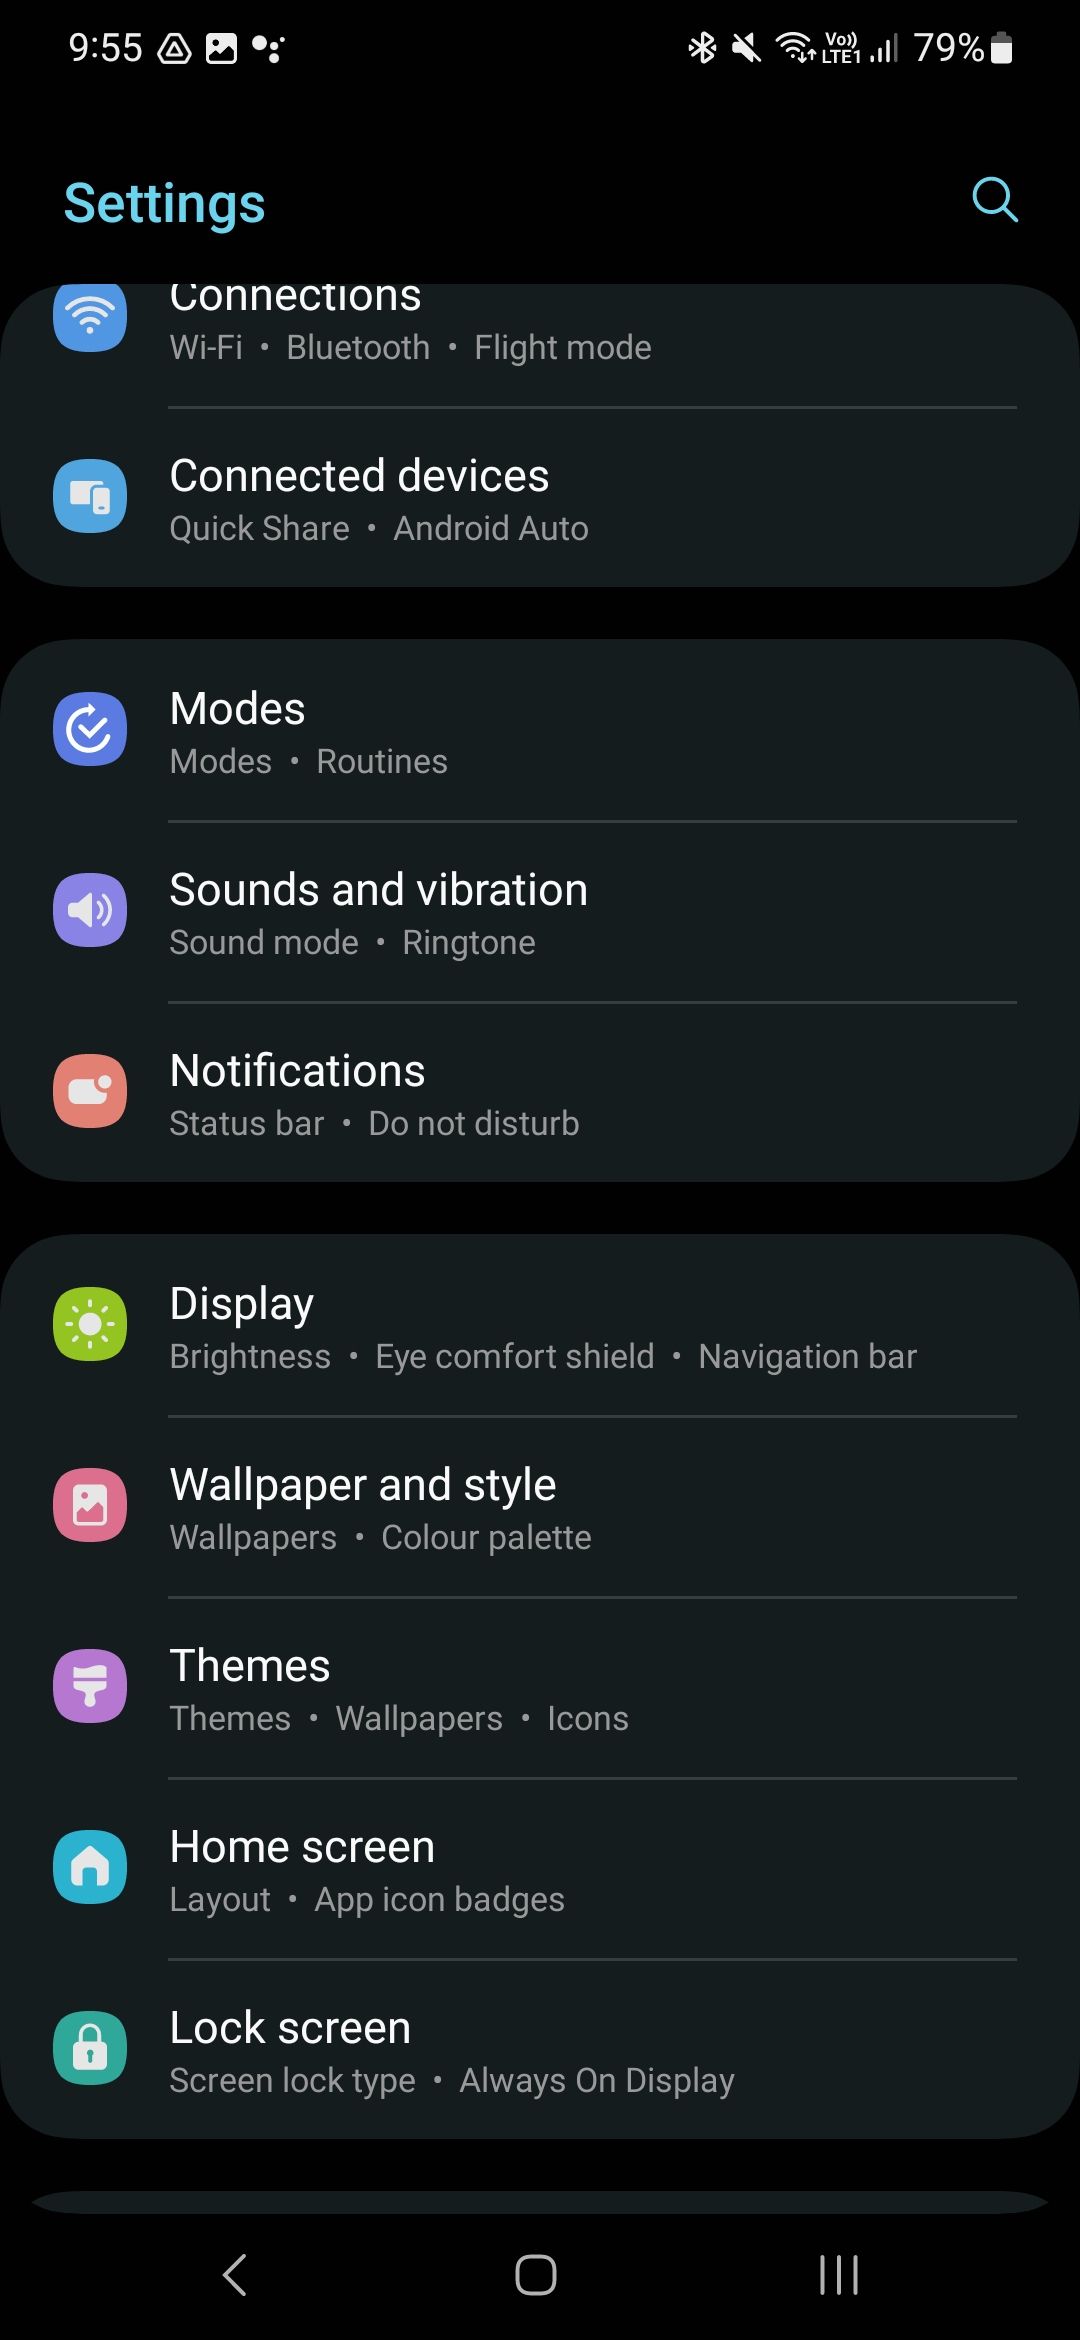 Samsung phone Settings menu